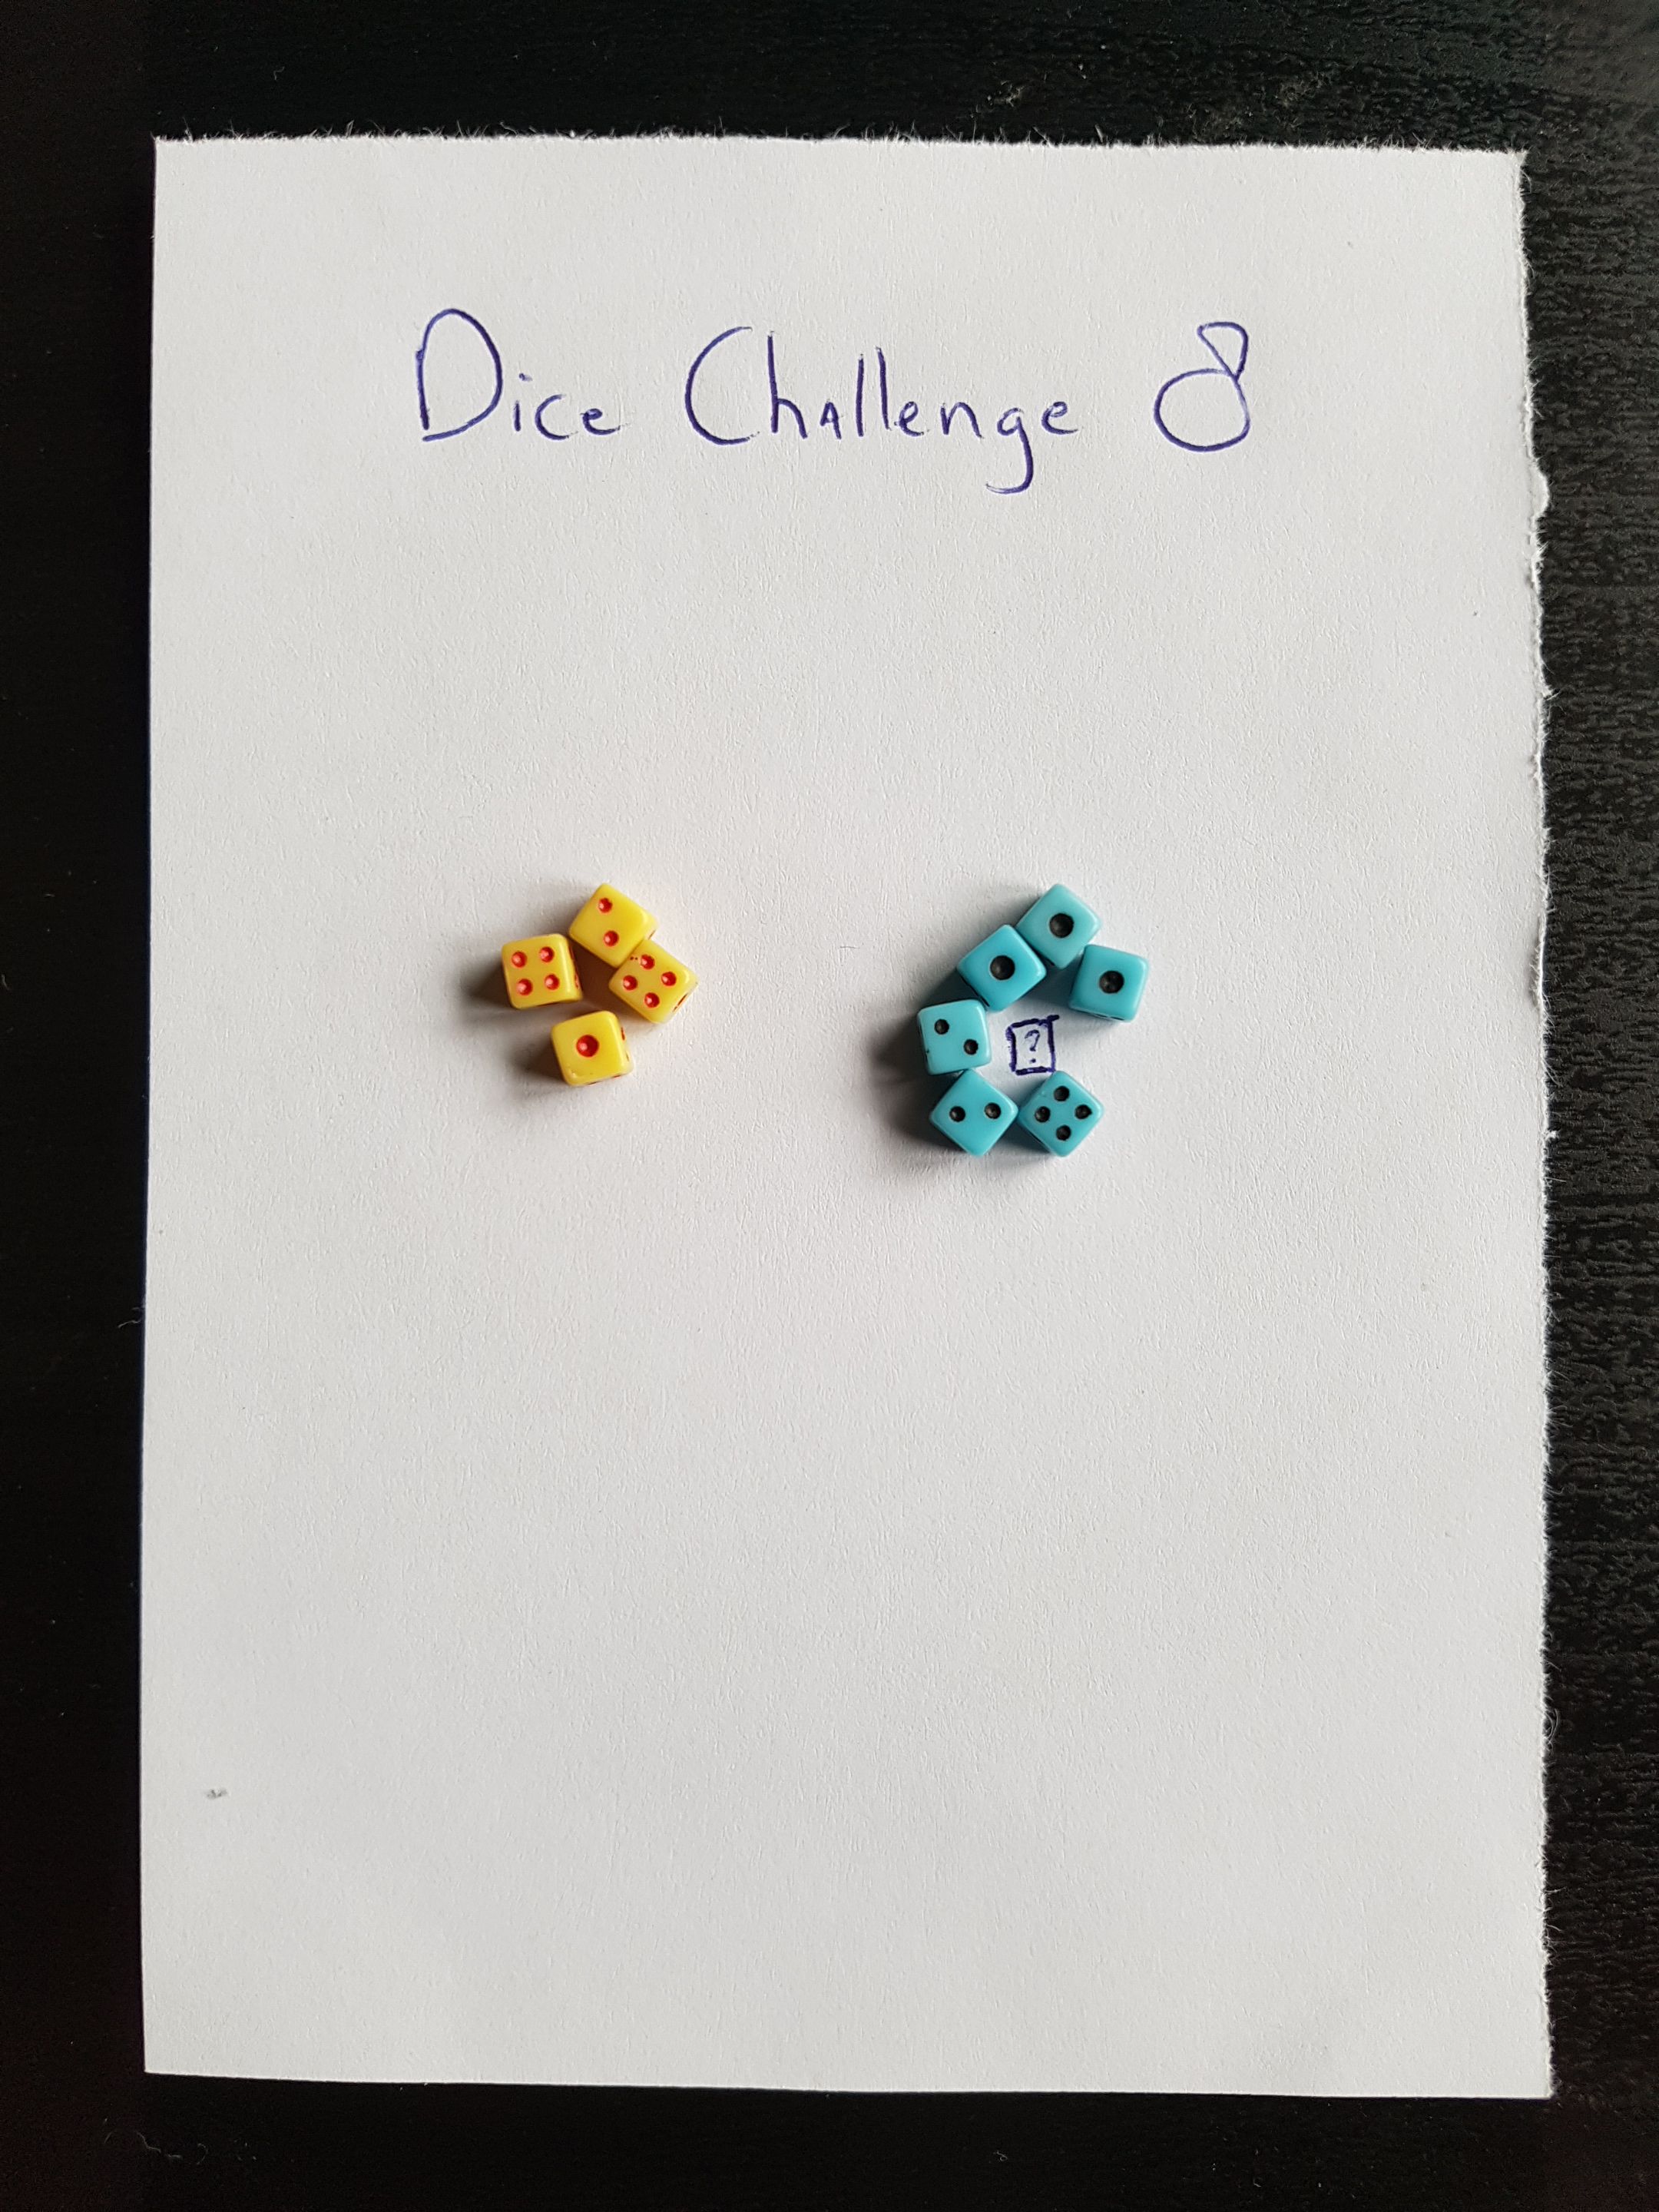 Dice Challenge 8.jpg